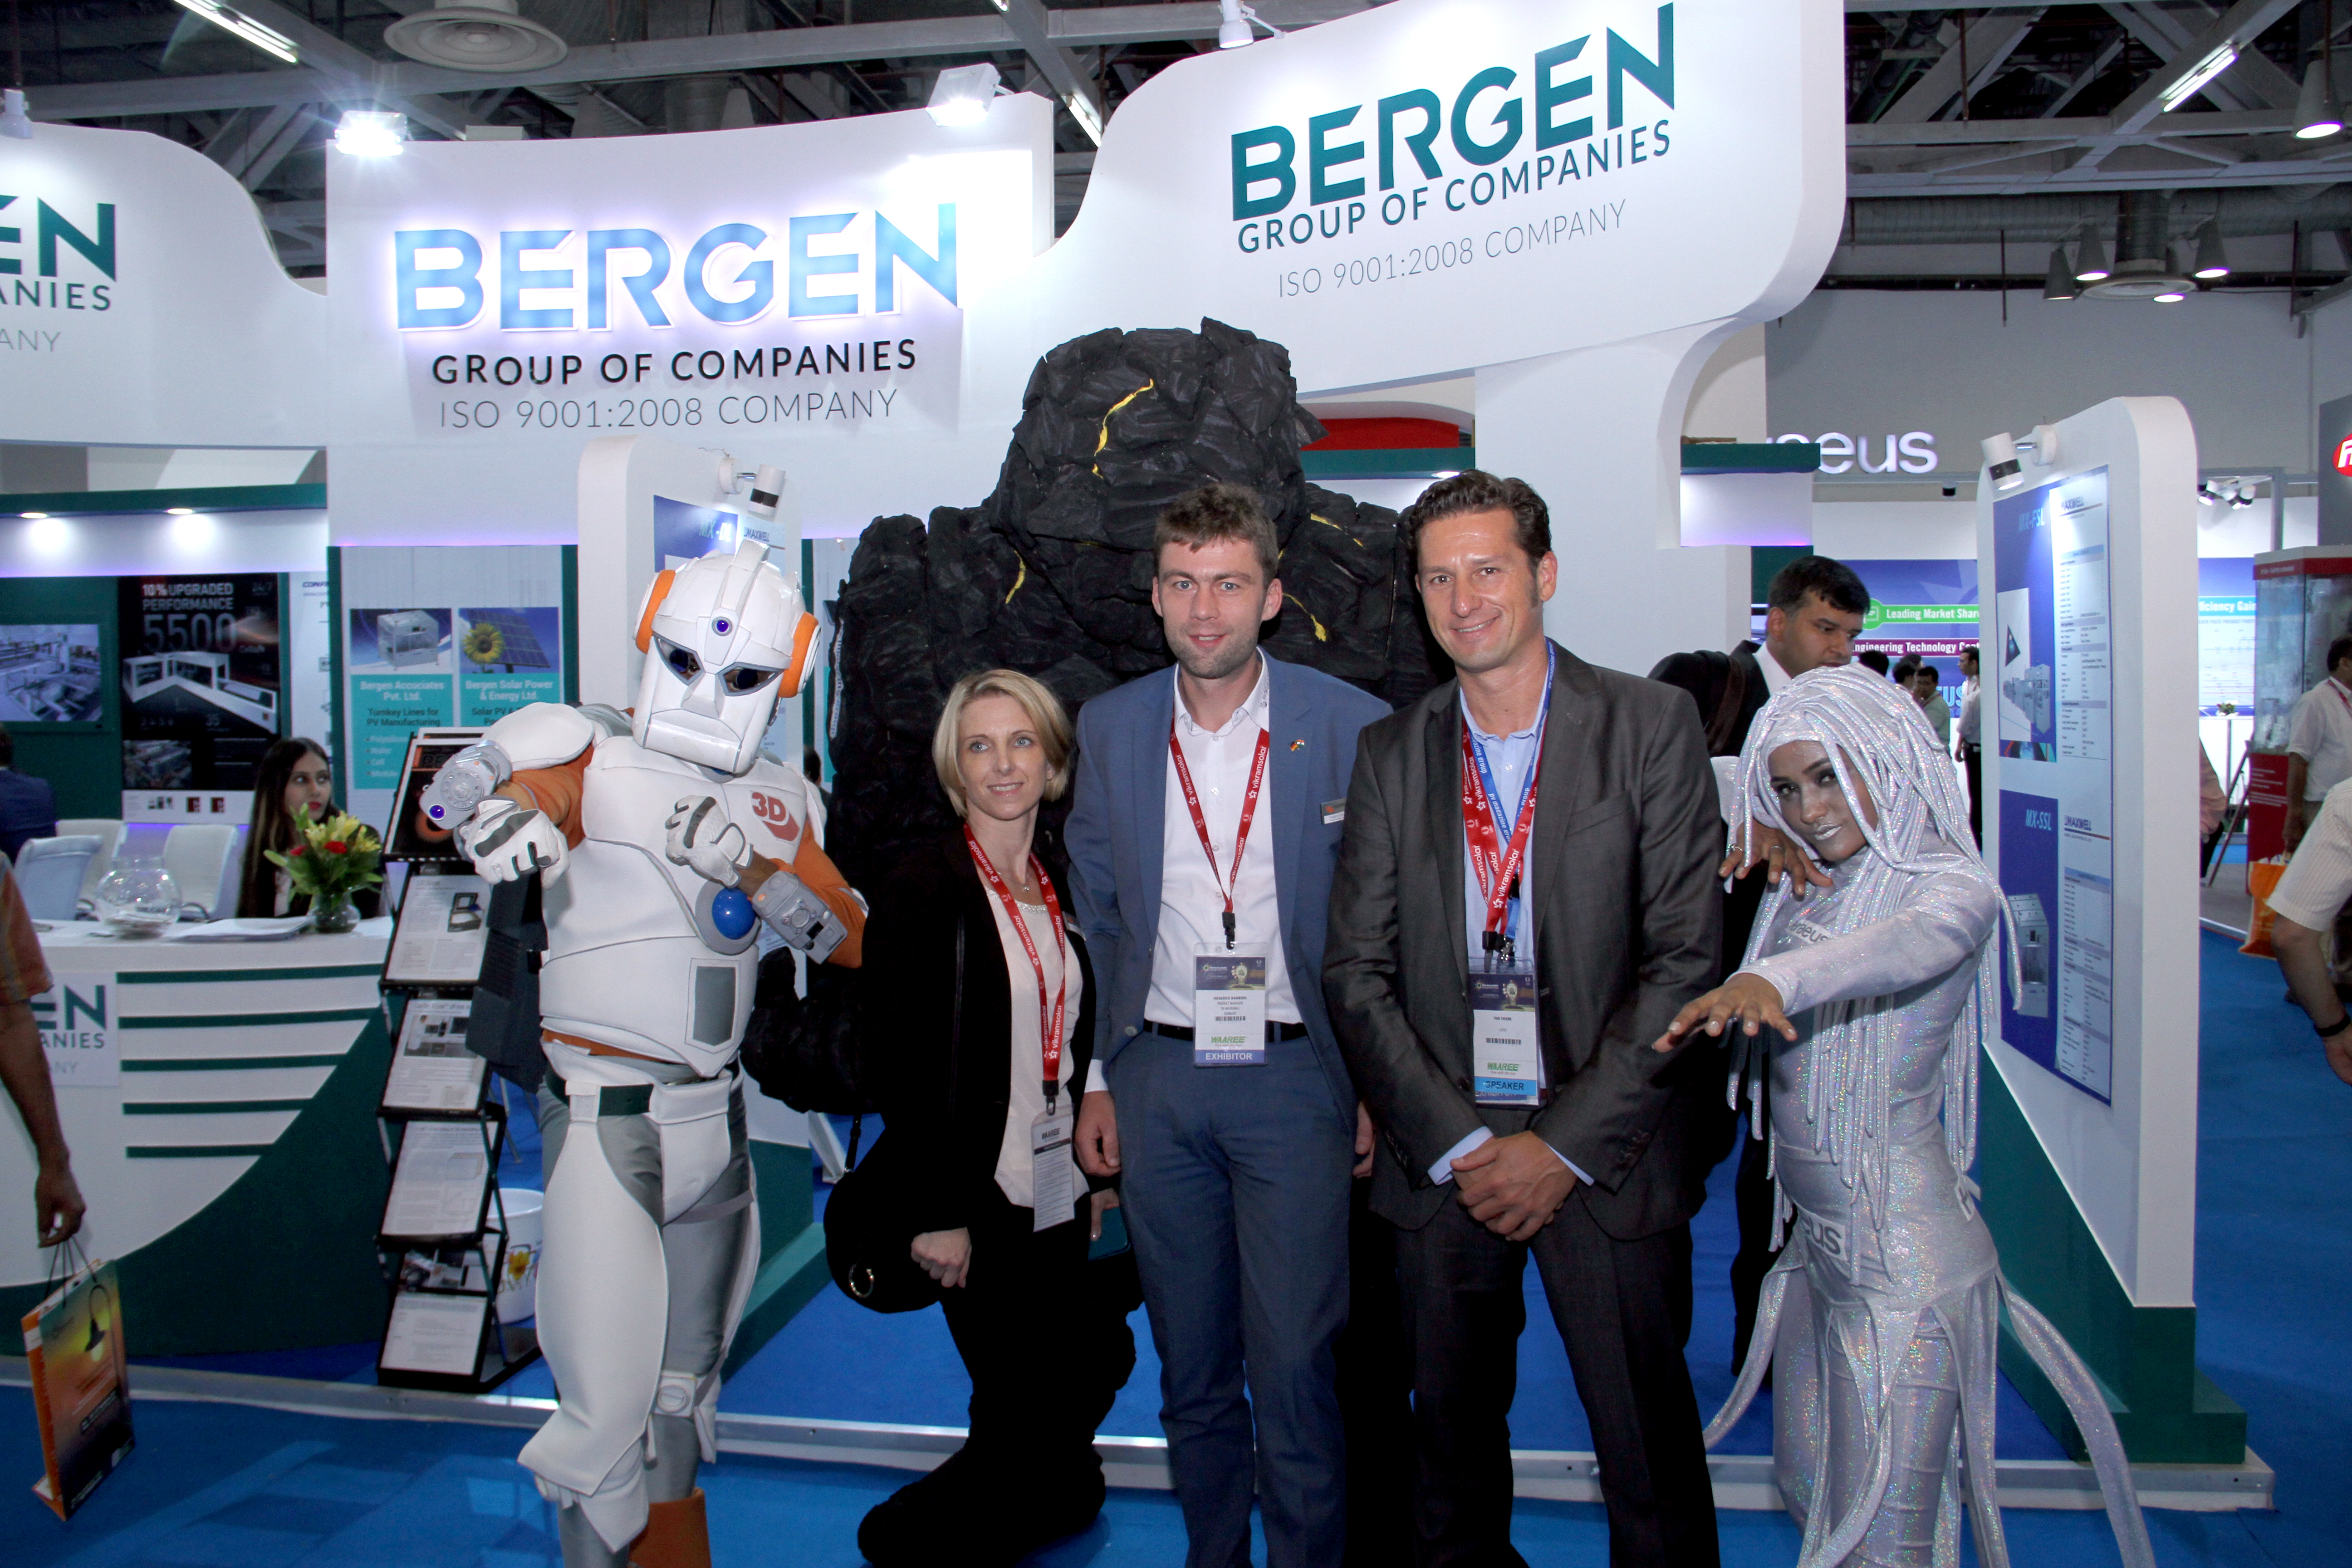 Bergen at REI Expo, 2017